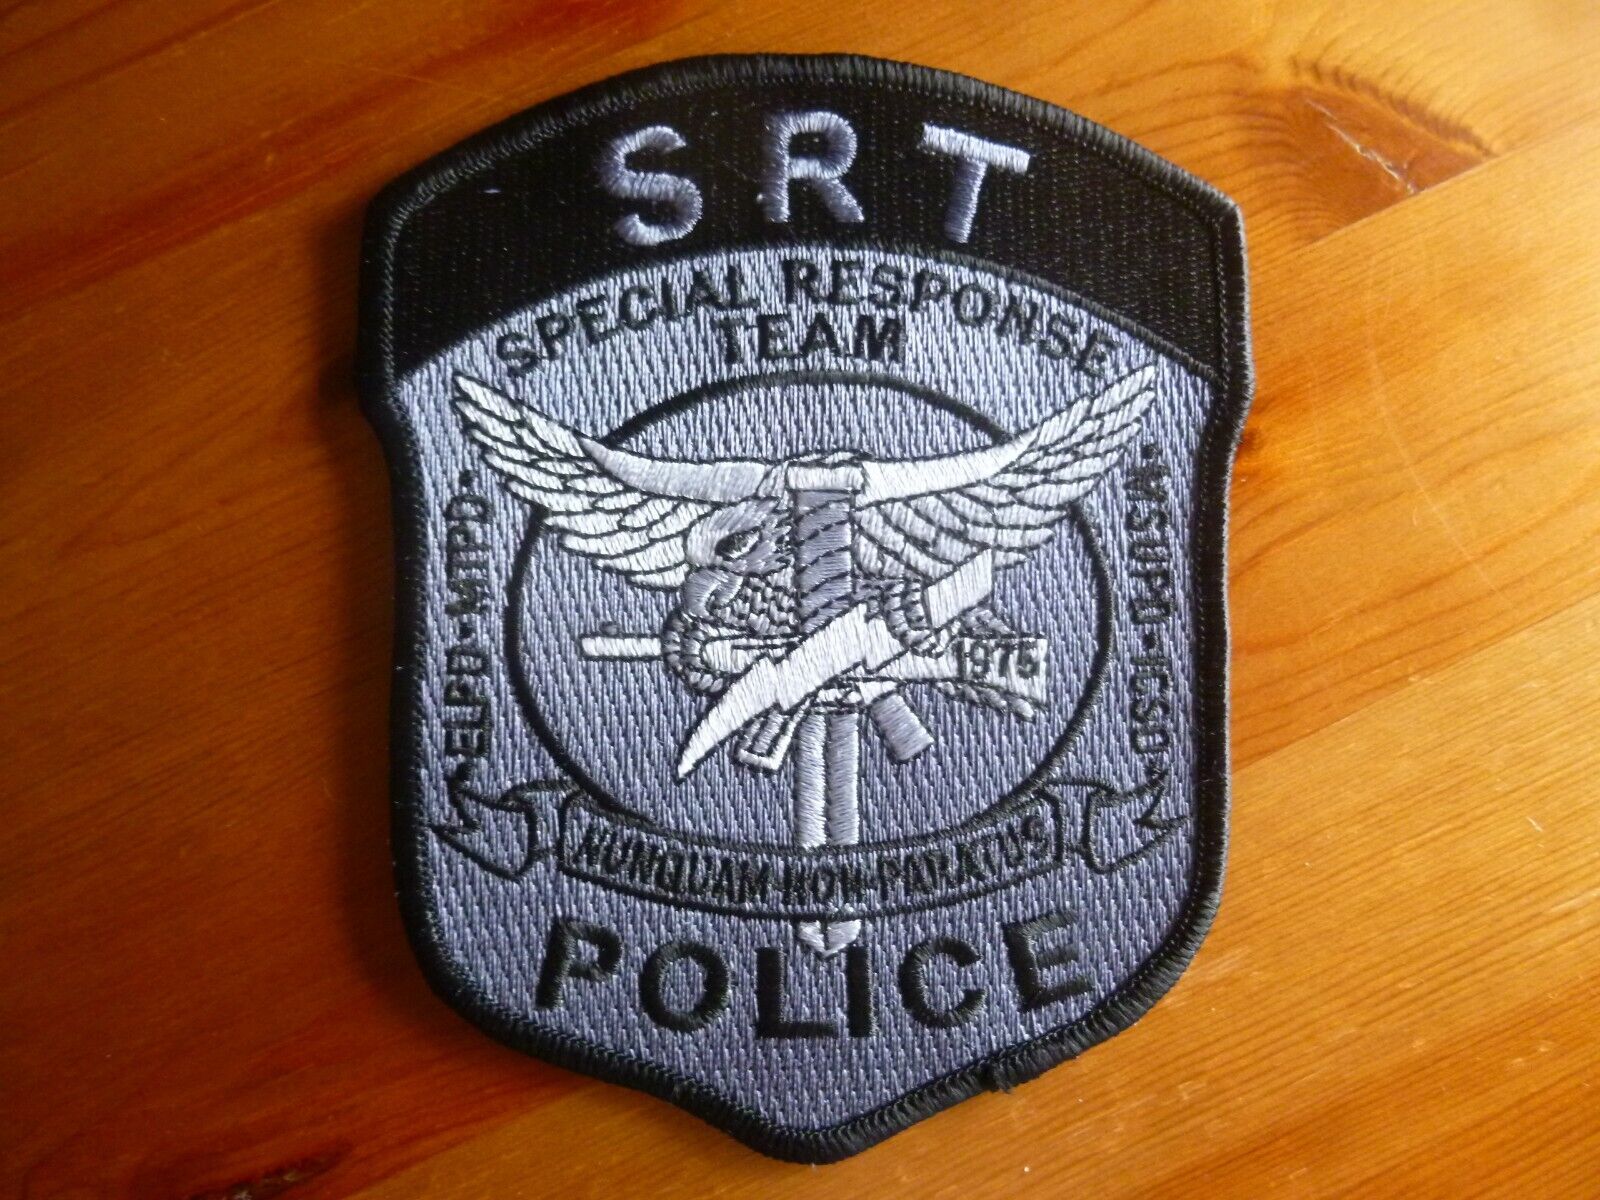 SPECIAL RESPONSE TEAM INGHAM MICHIGAN Police Patch UNIT USA Obsolete Original